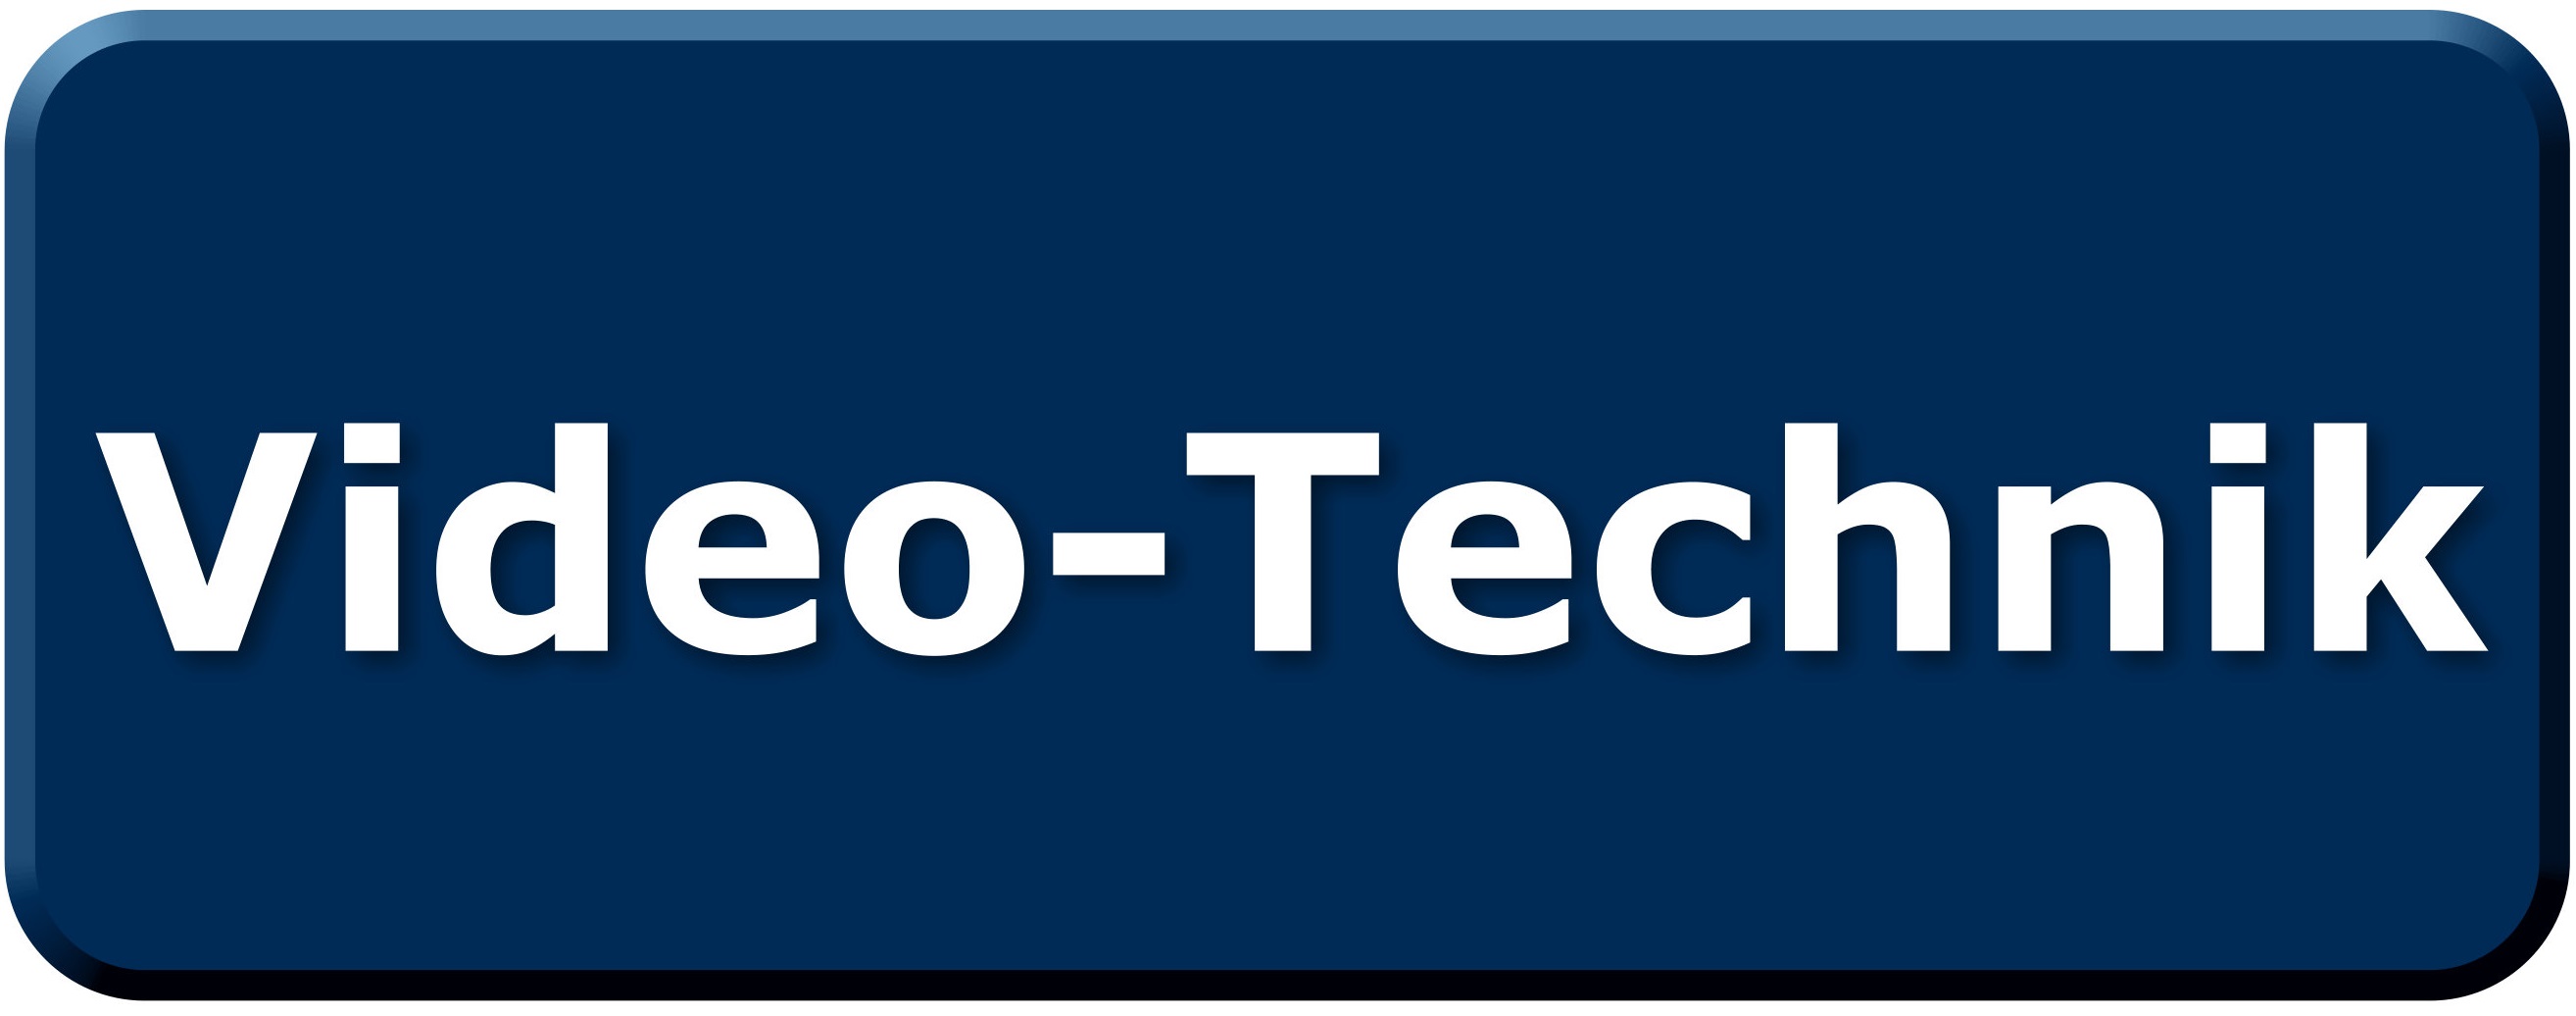 Video-Technik: Normen, Standards, Codecs, Spezifikationen